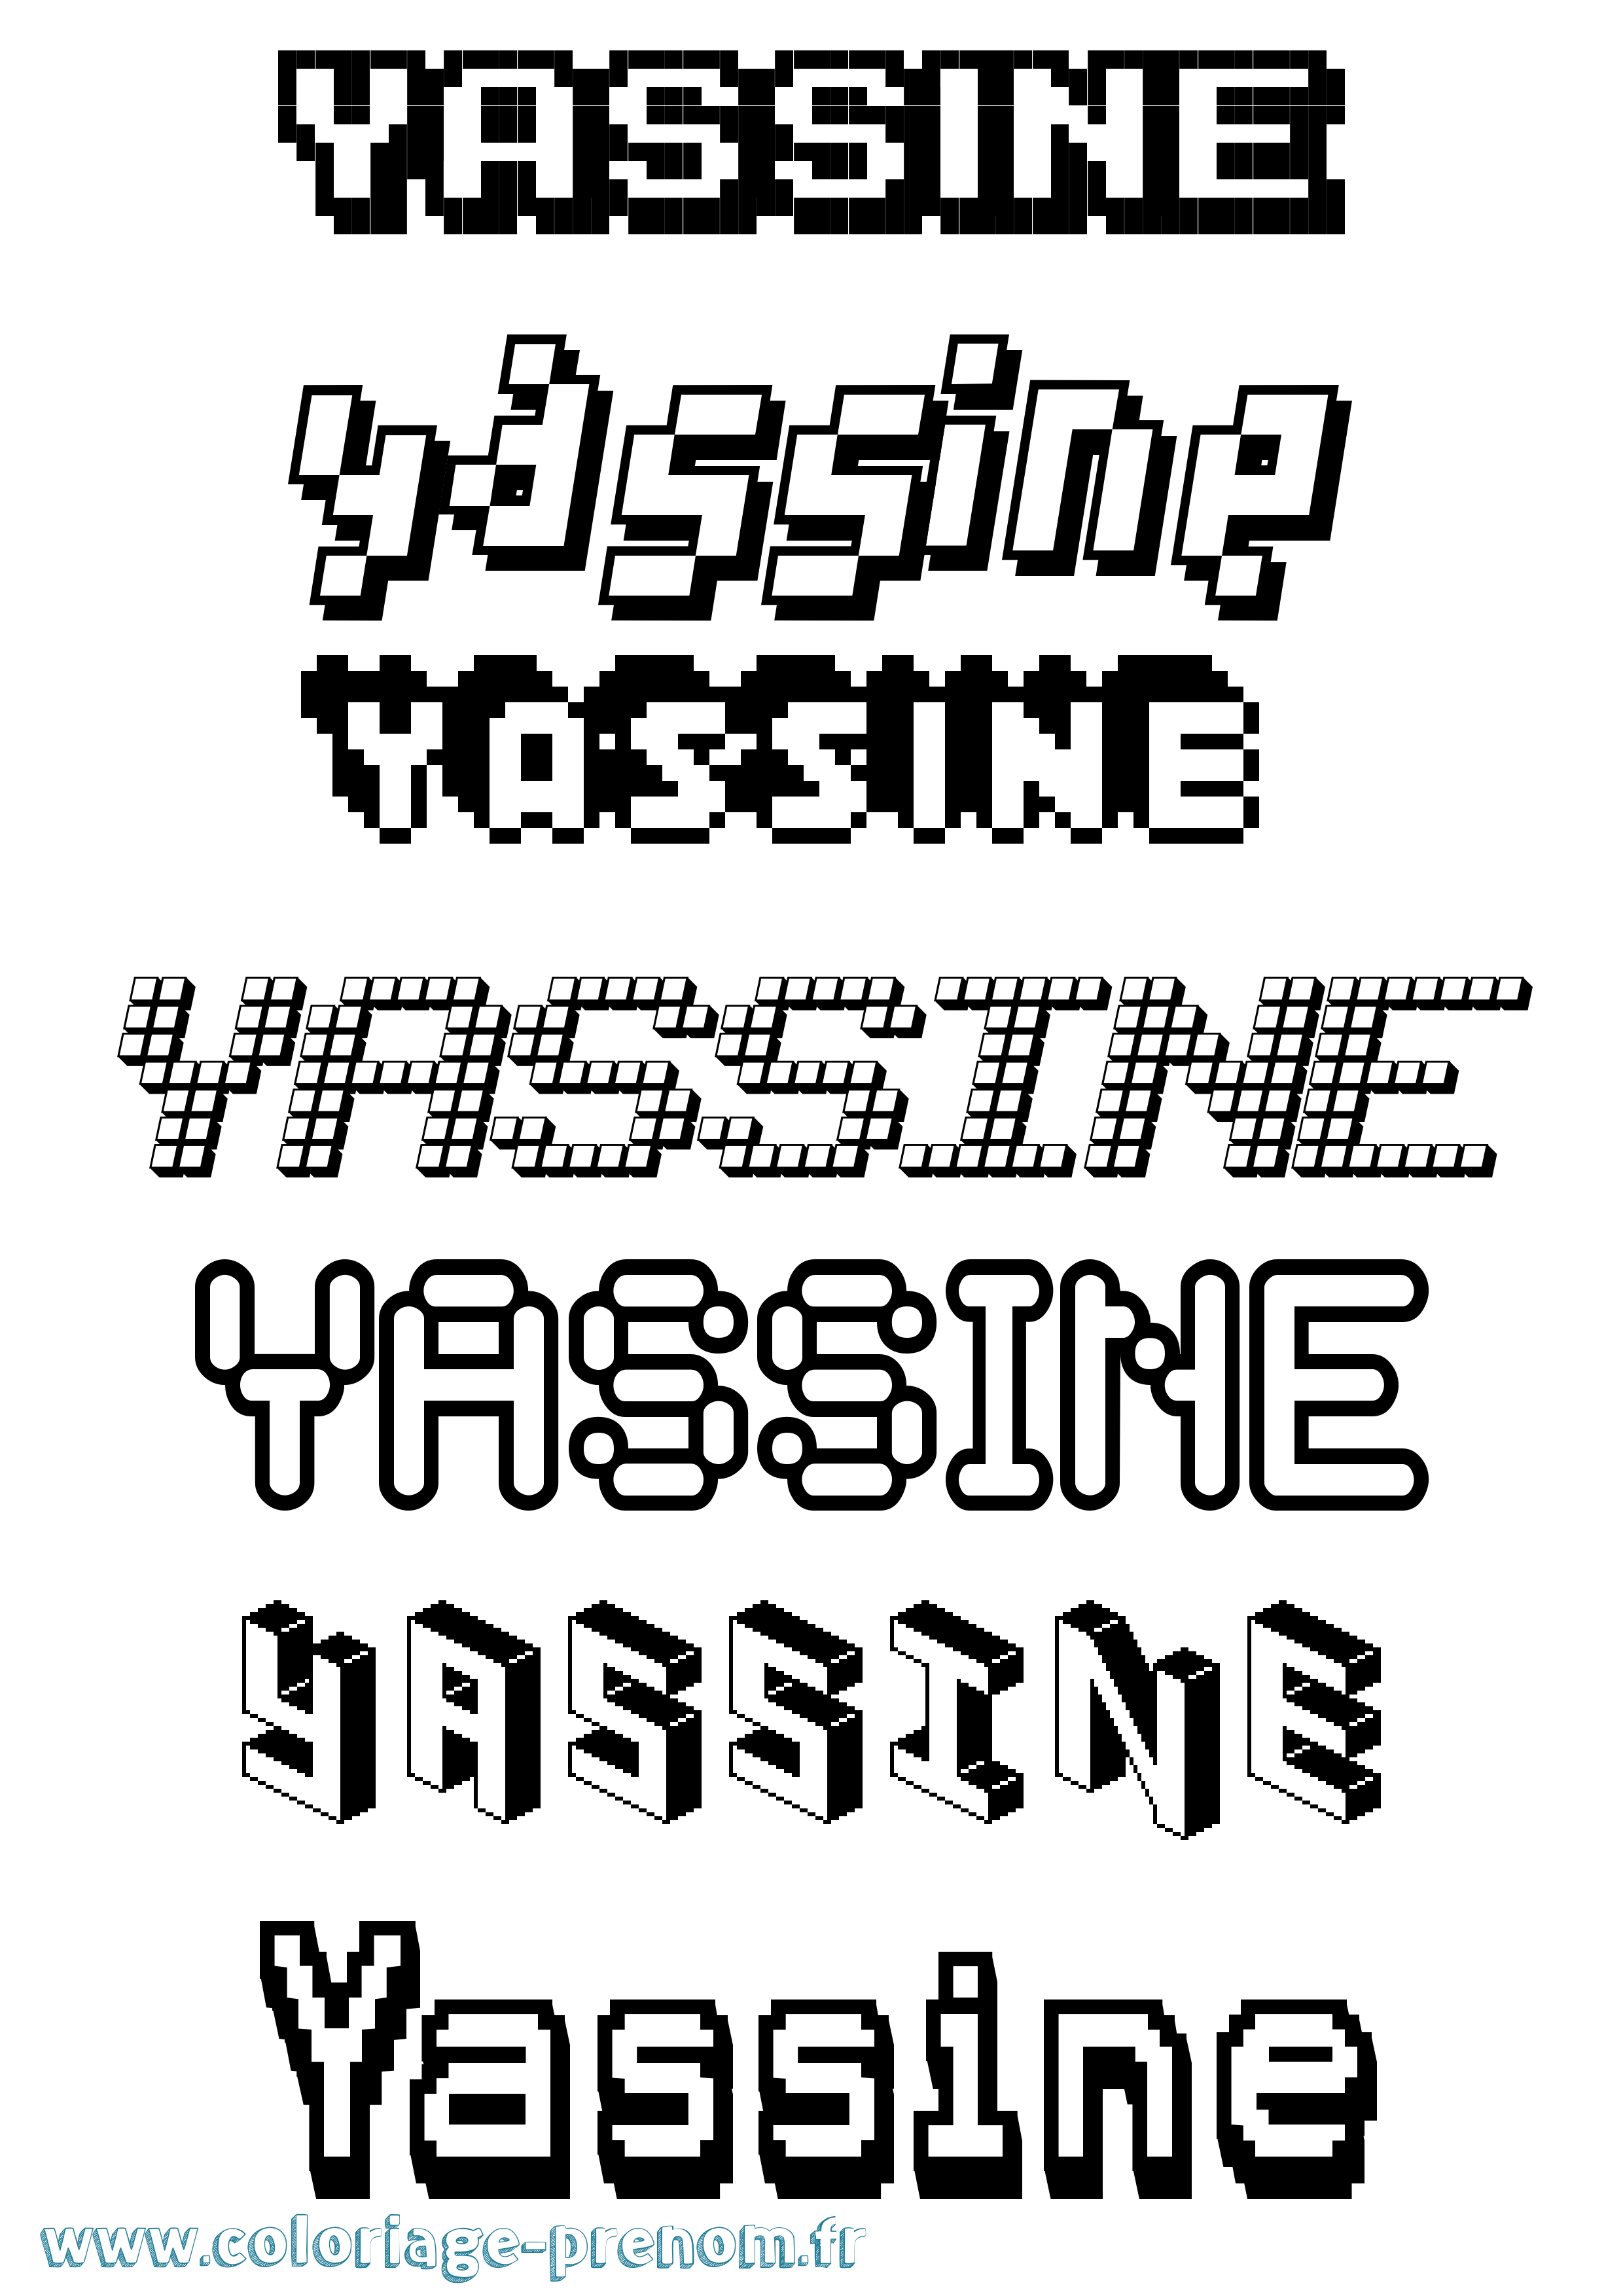 Coloriage prénom Yassine Pixel